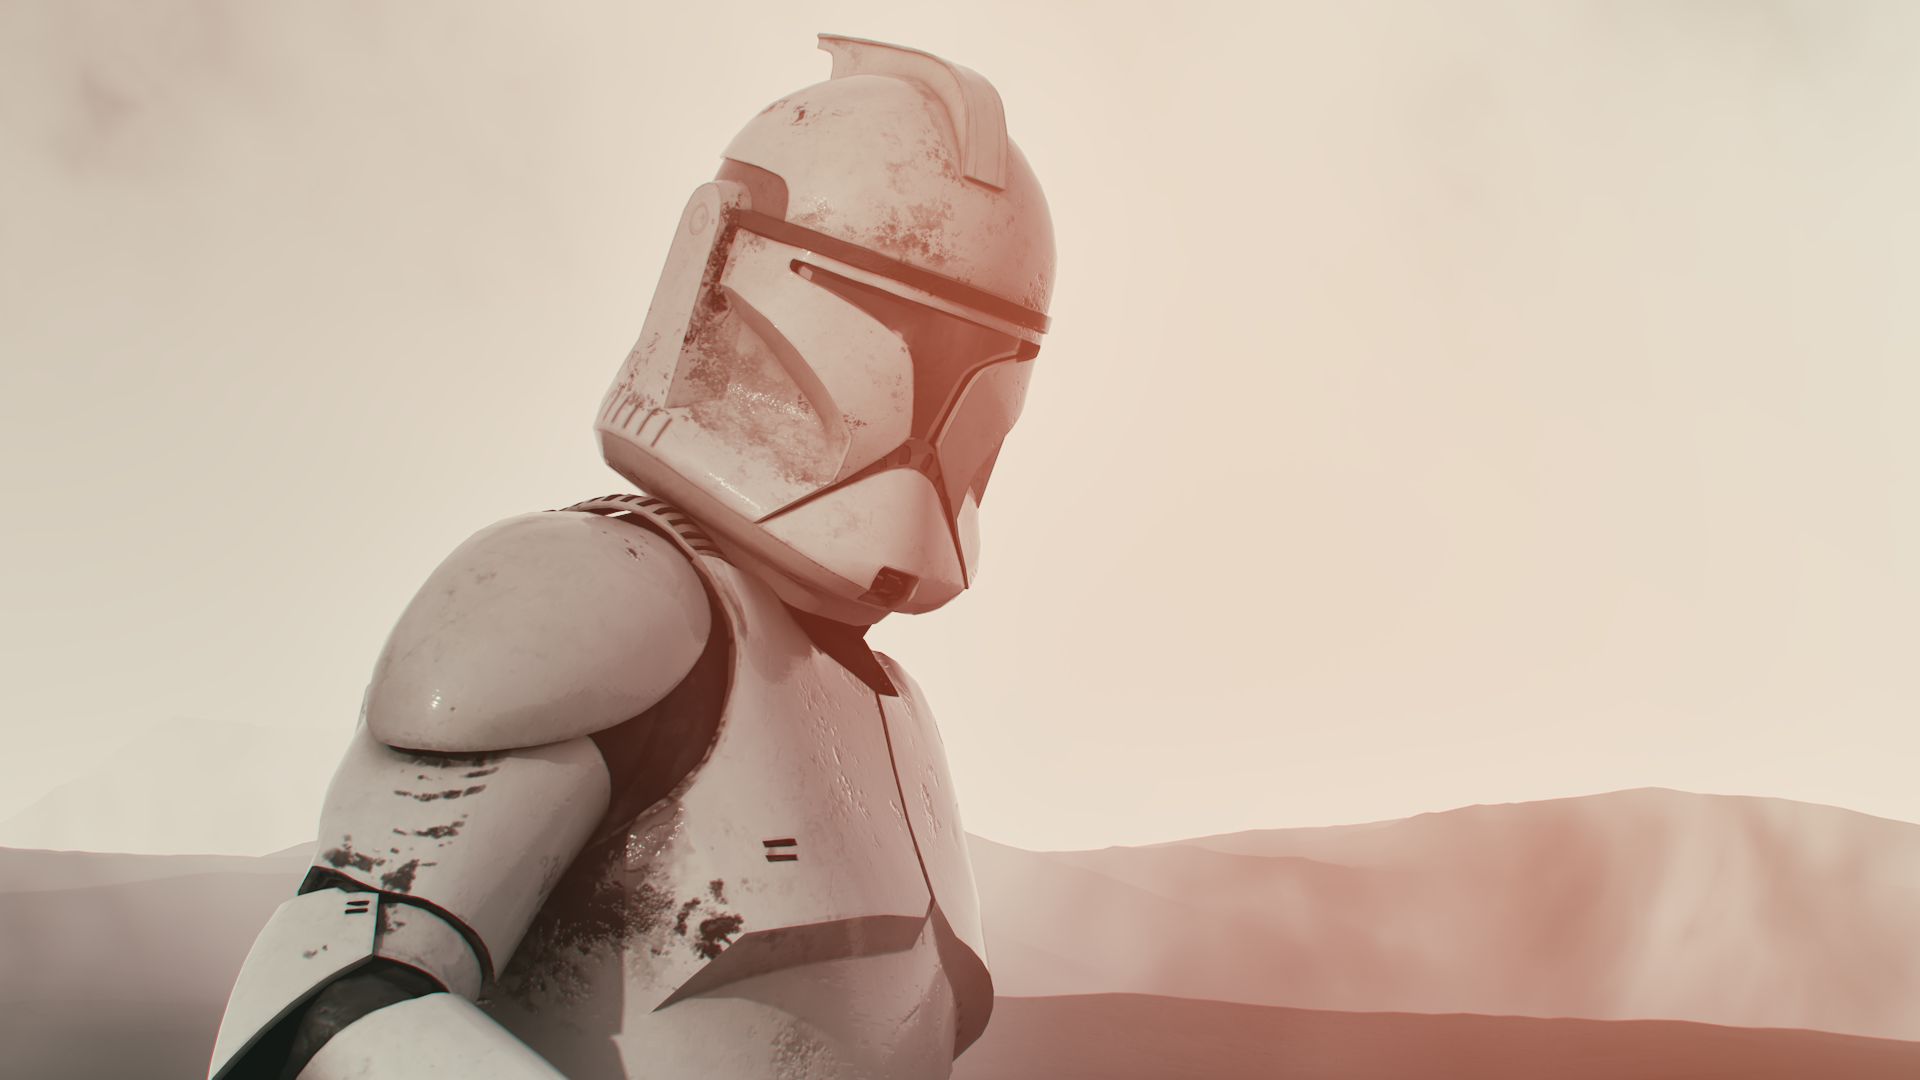 star wars wallpaper clone trooper